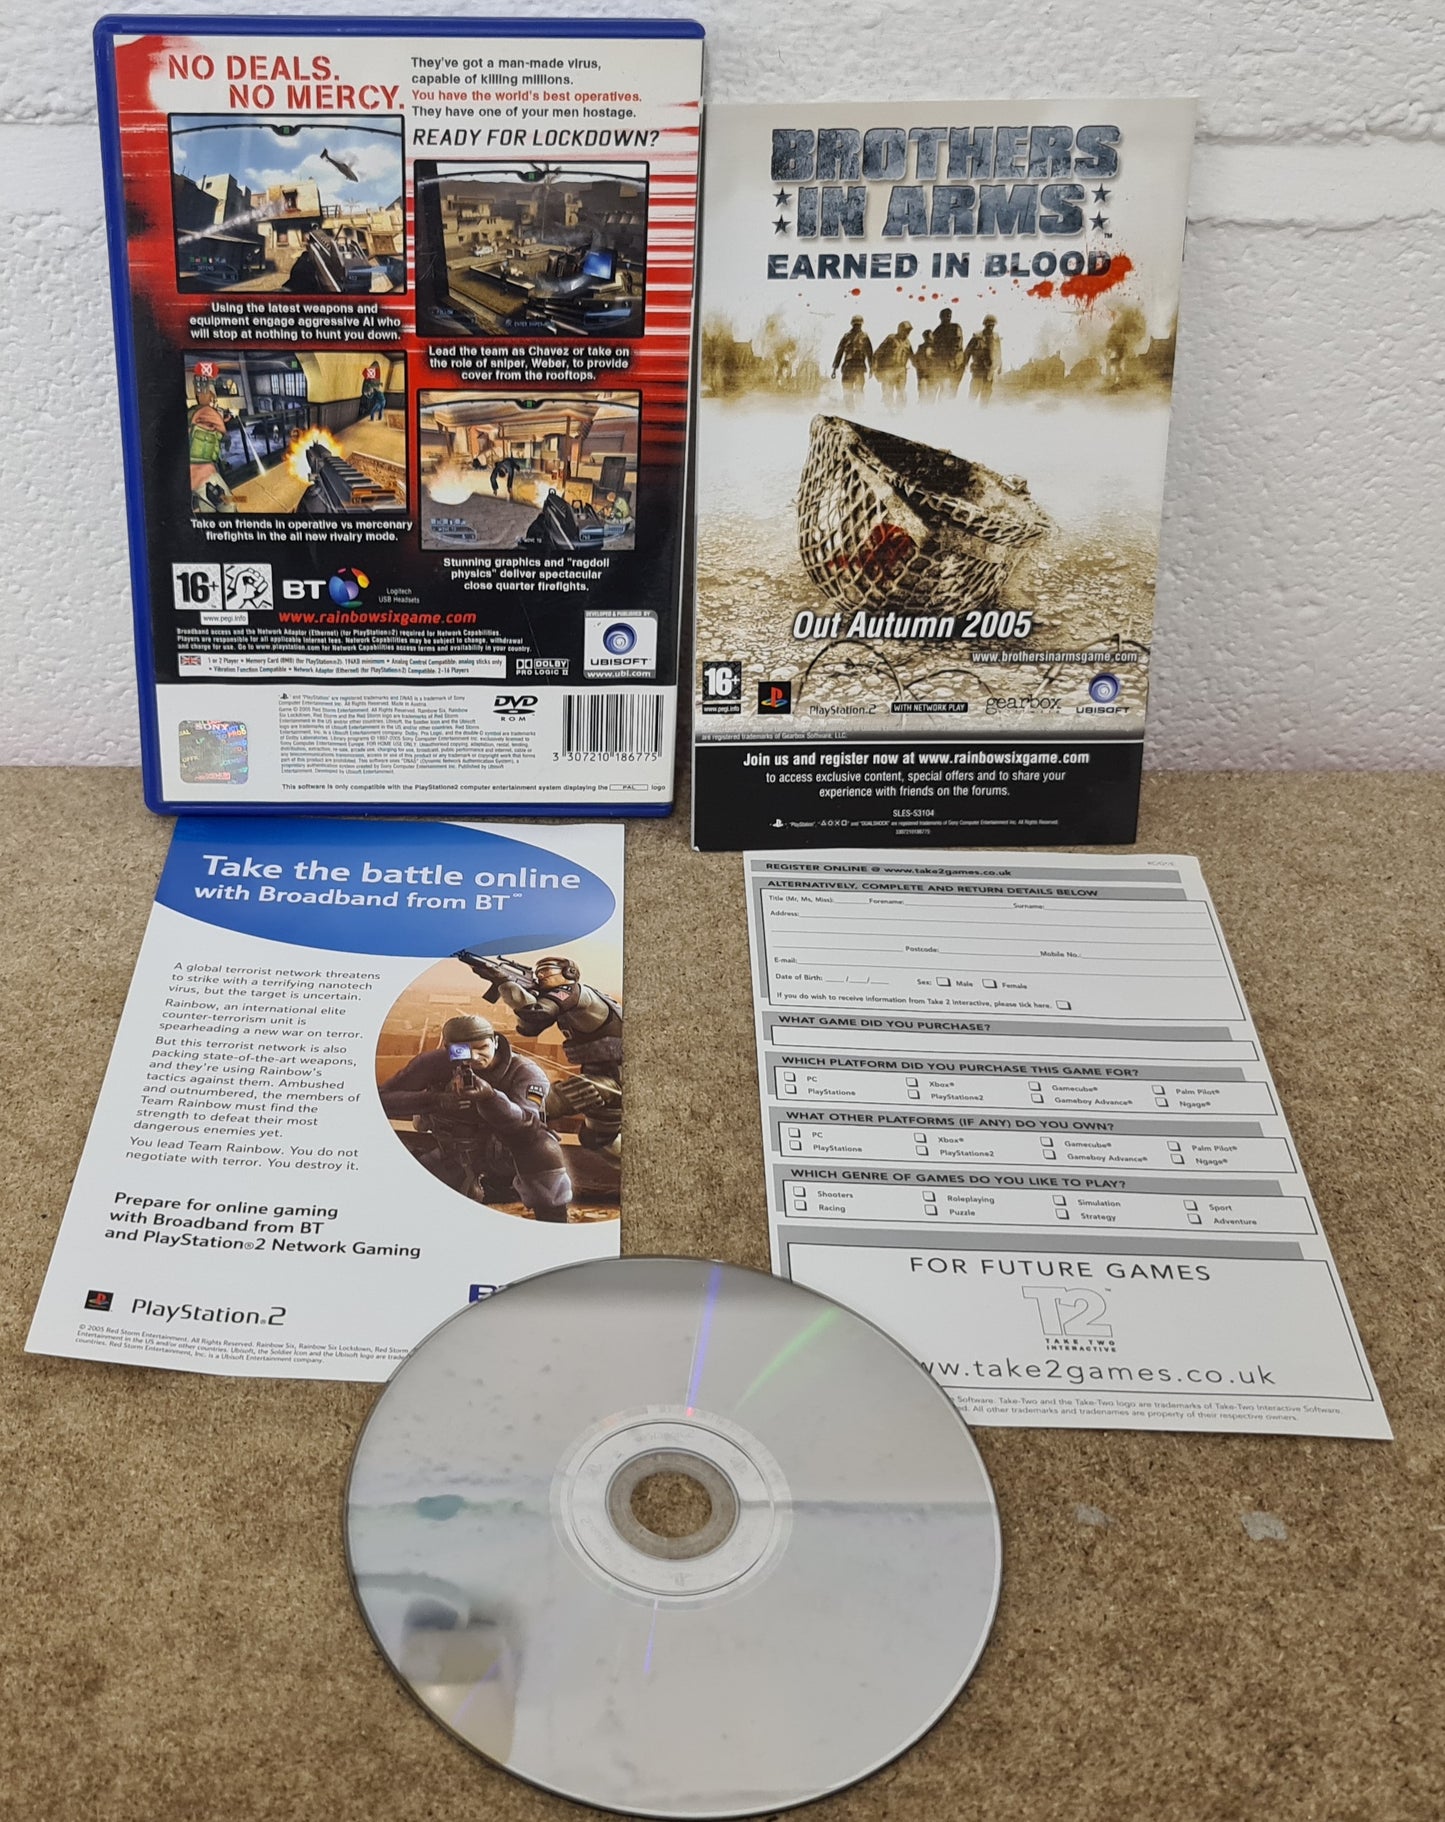 Tom Clancy's Rainbow Six Lockdown Sony Playstation 2 (PS2) Game